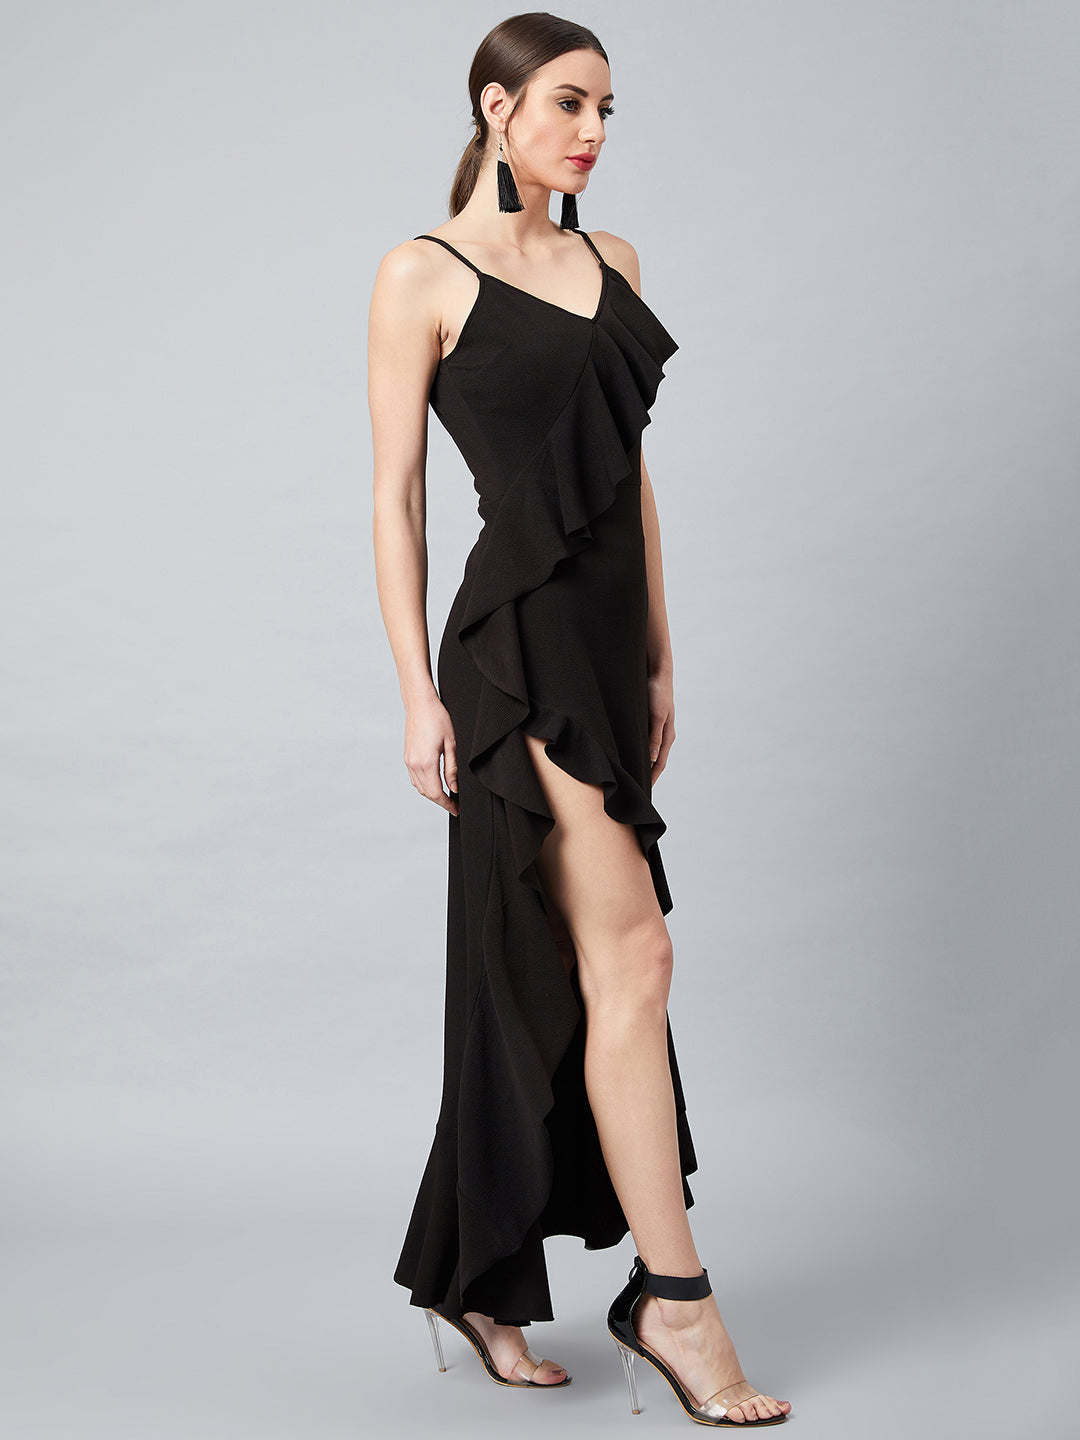 Athena Black Ruffled Maxi Dress - Athena Lifestyle